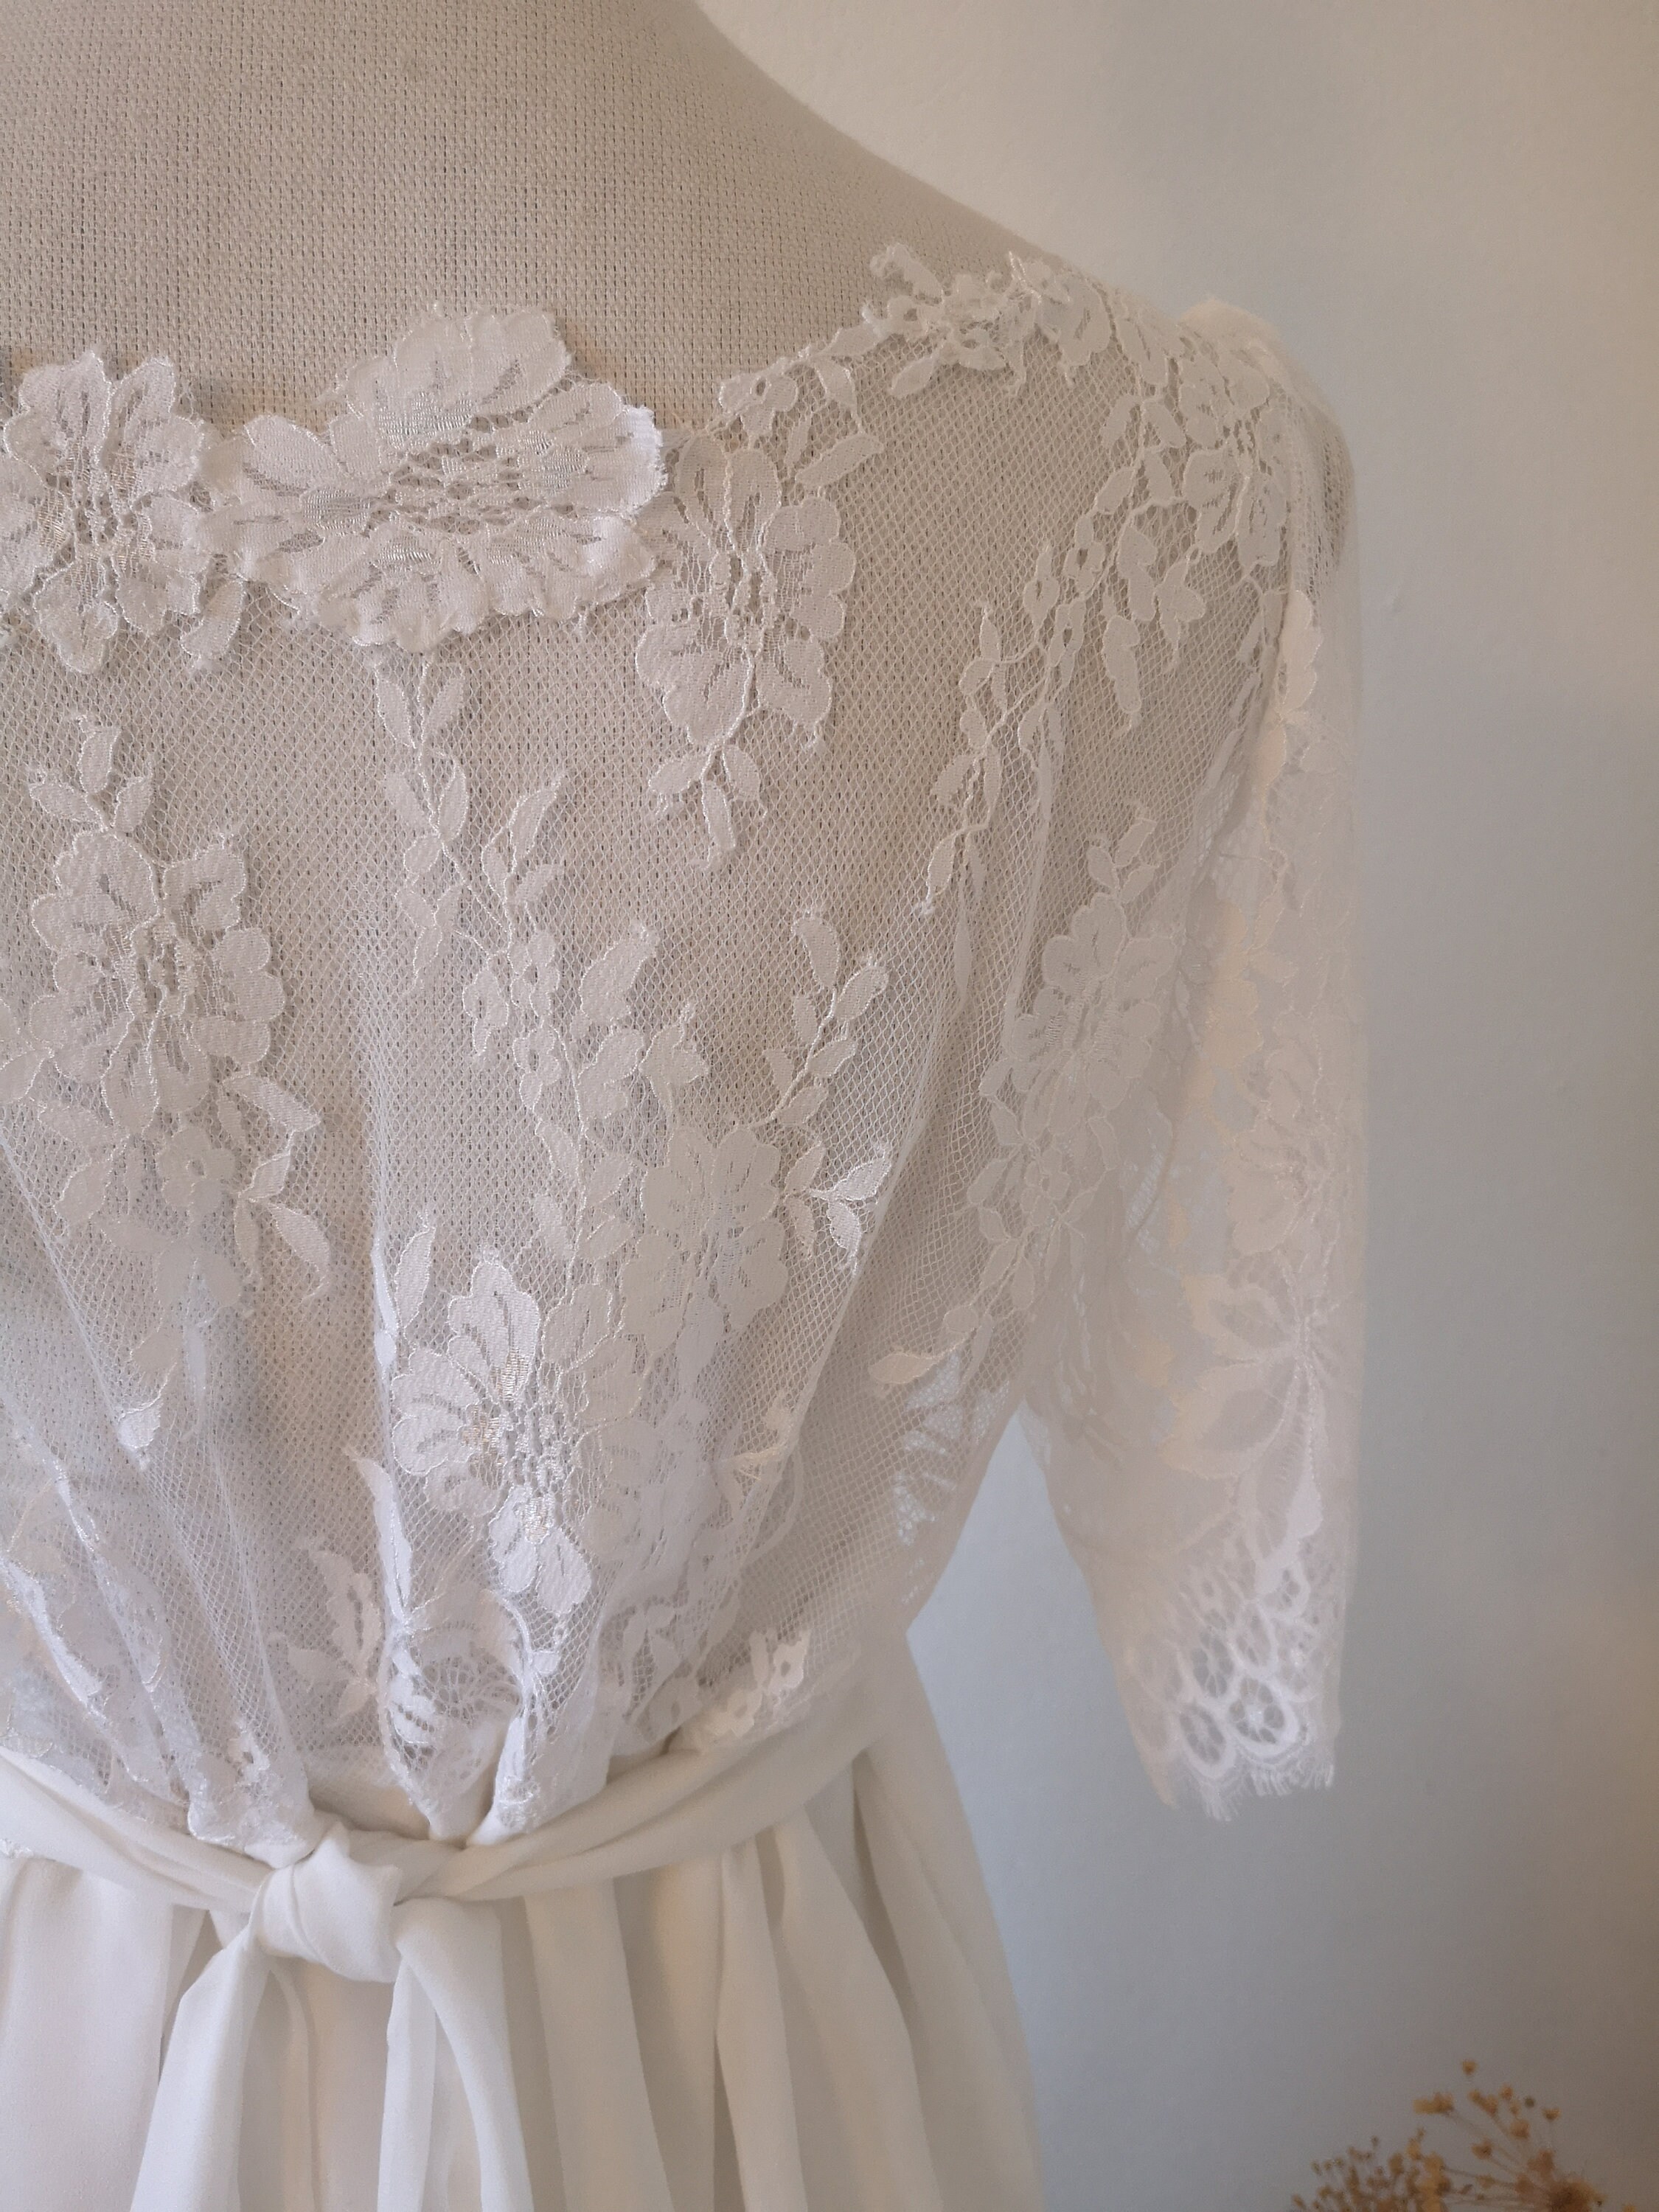 The Best Sparkling Lace Wedding Dress. Sparkly Flowy Wedding Dress